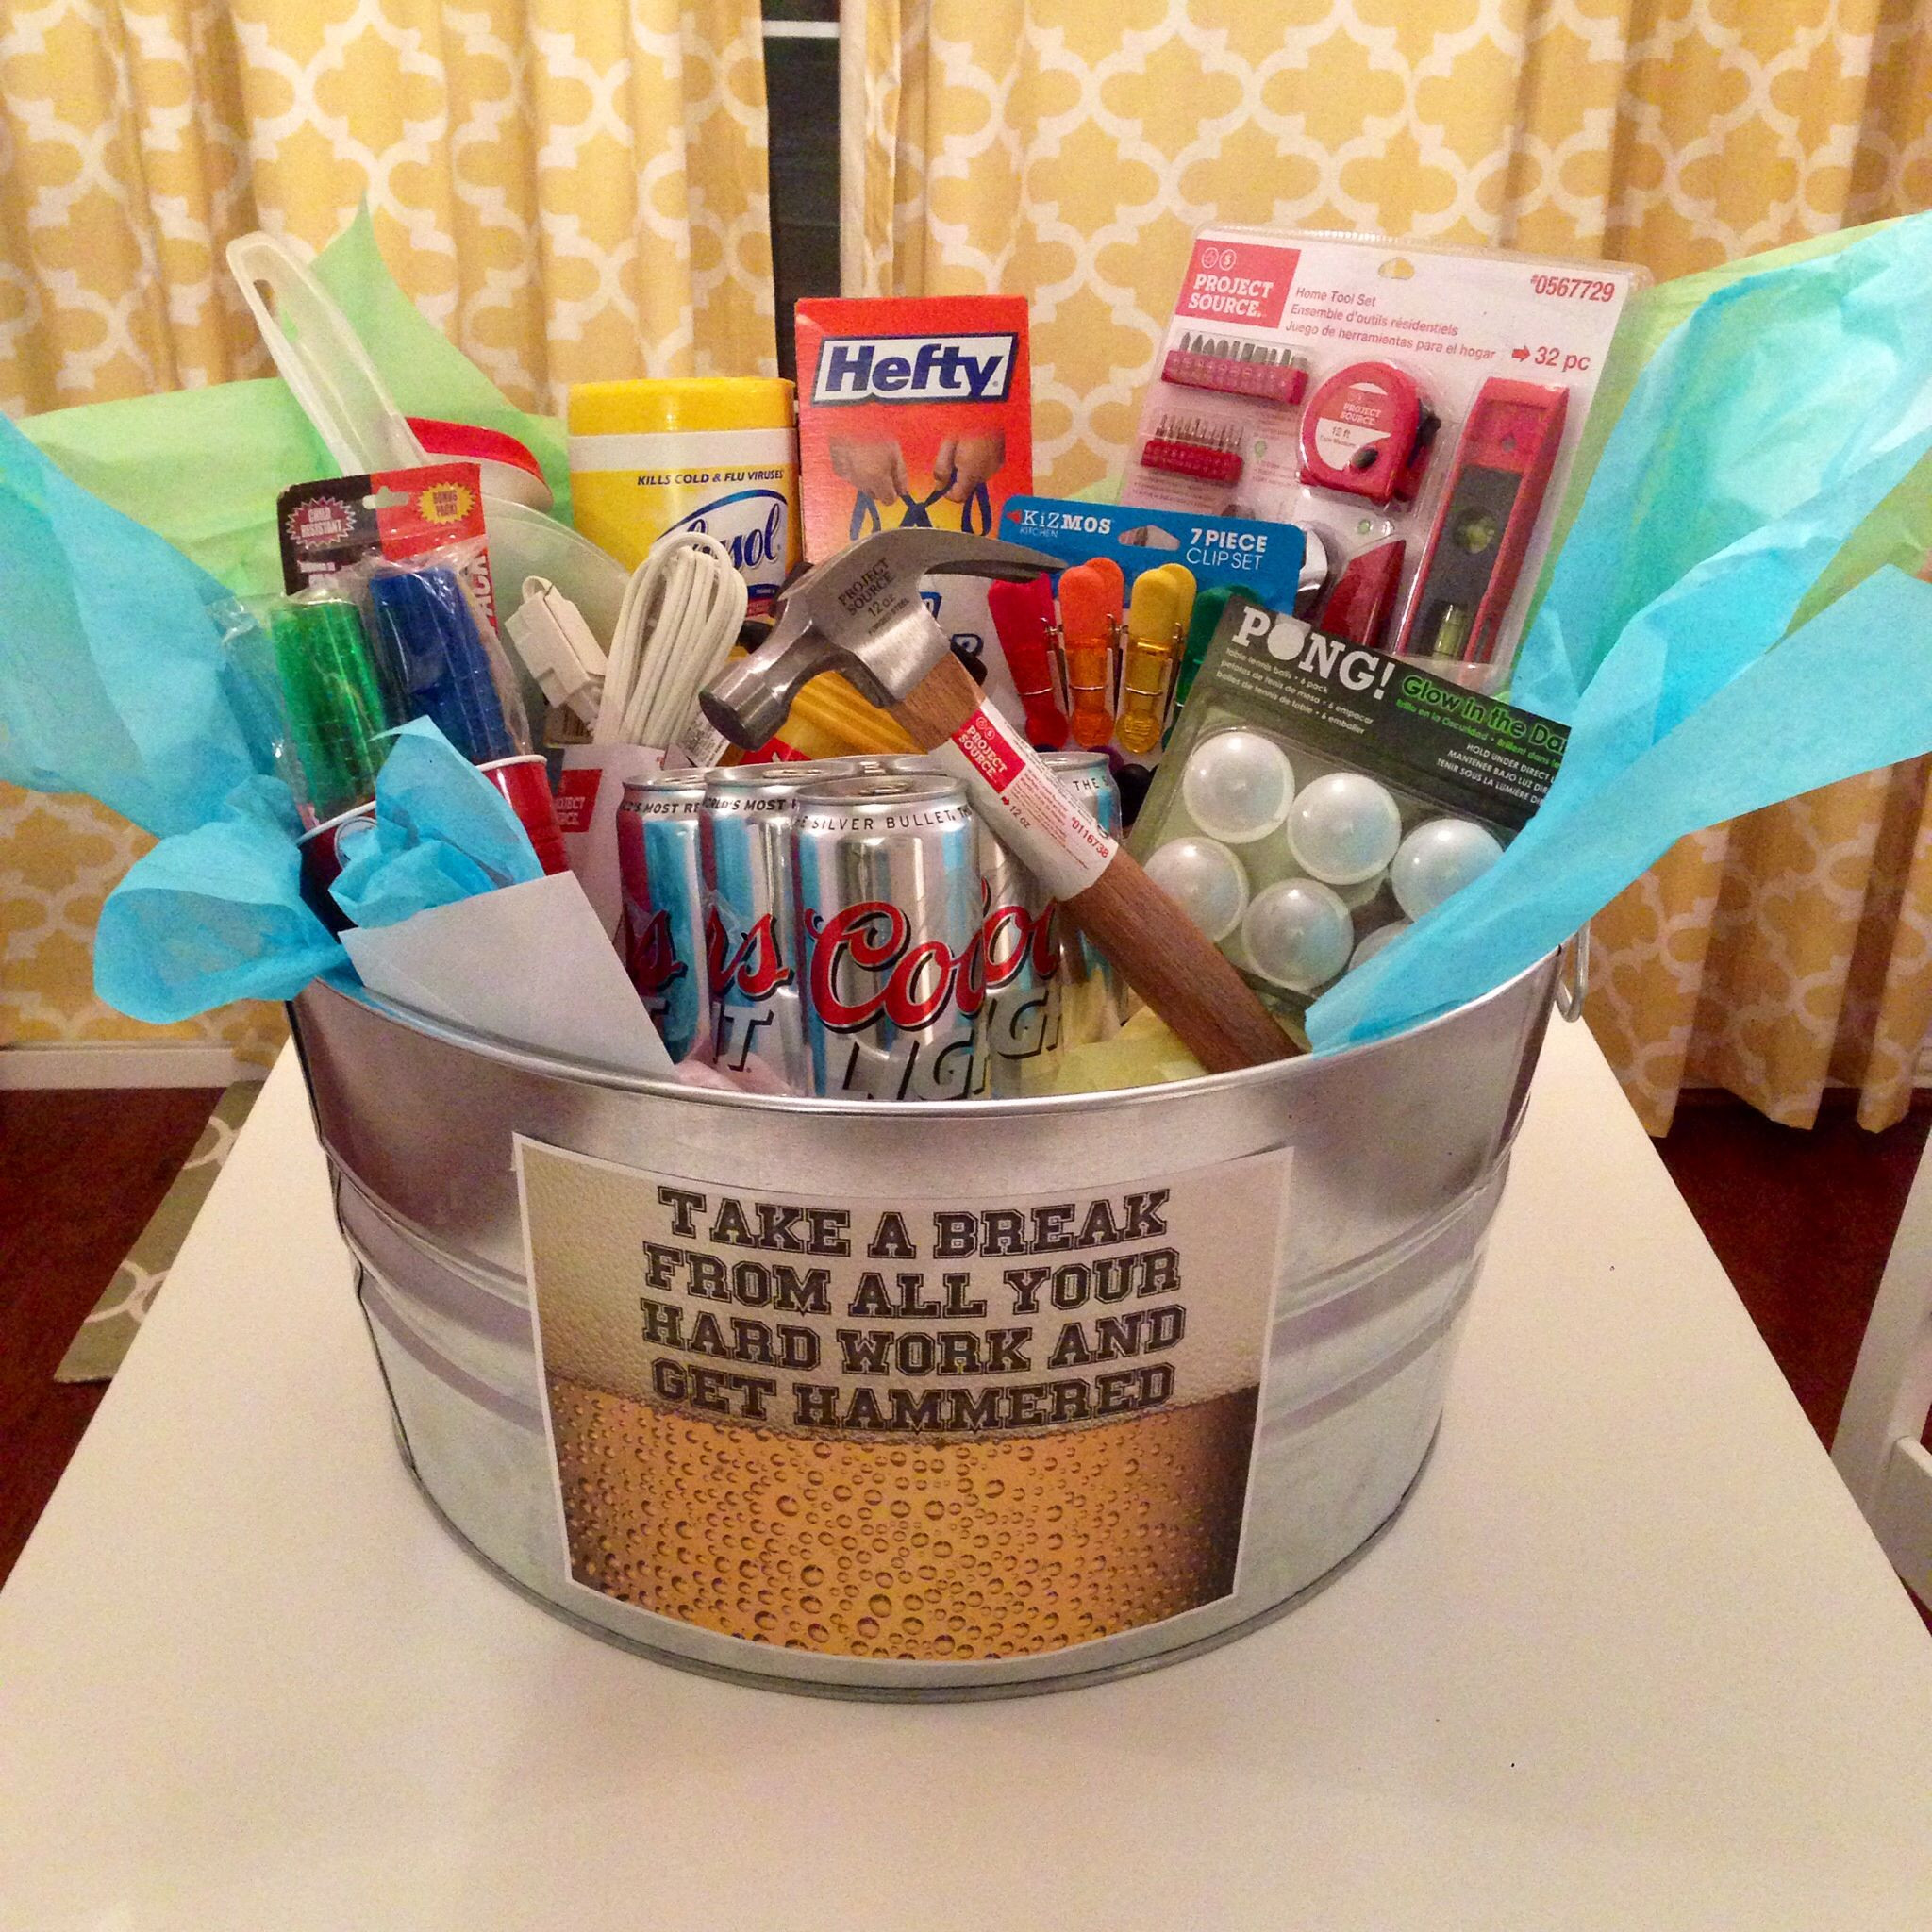 Housewarming Gift Basket Ideas
 The housewarming basket I made my boyfriend